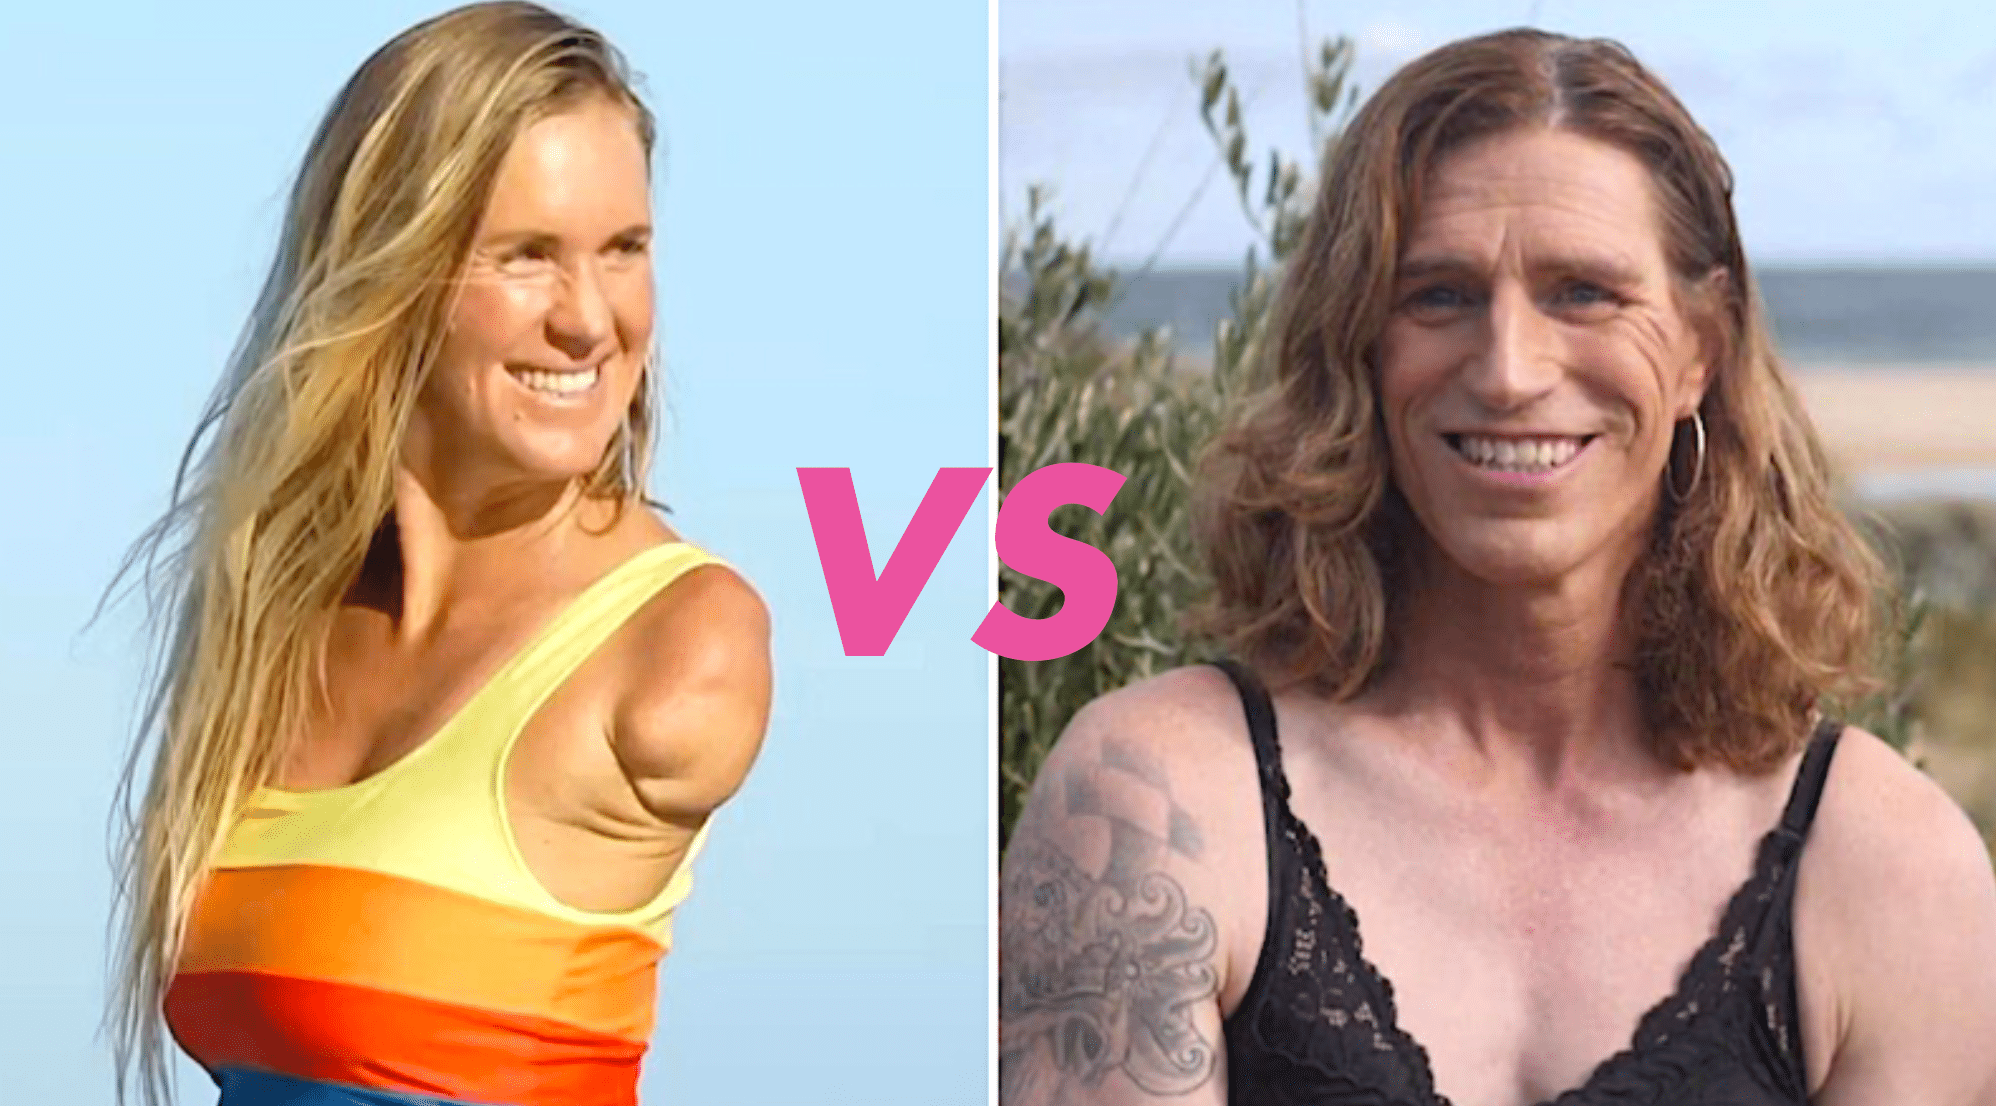 Rip Curl takes down Instagram post promoting transgender surfer